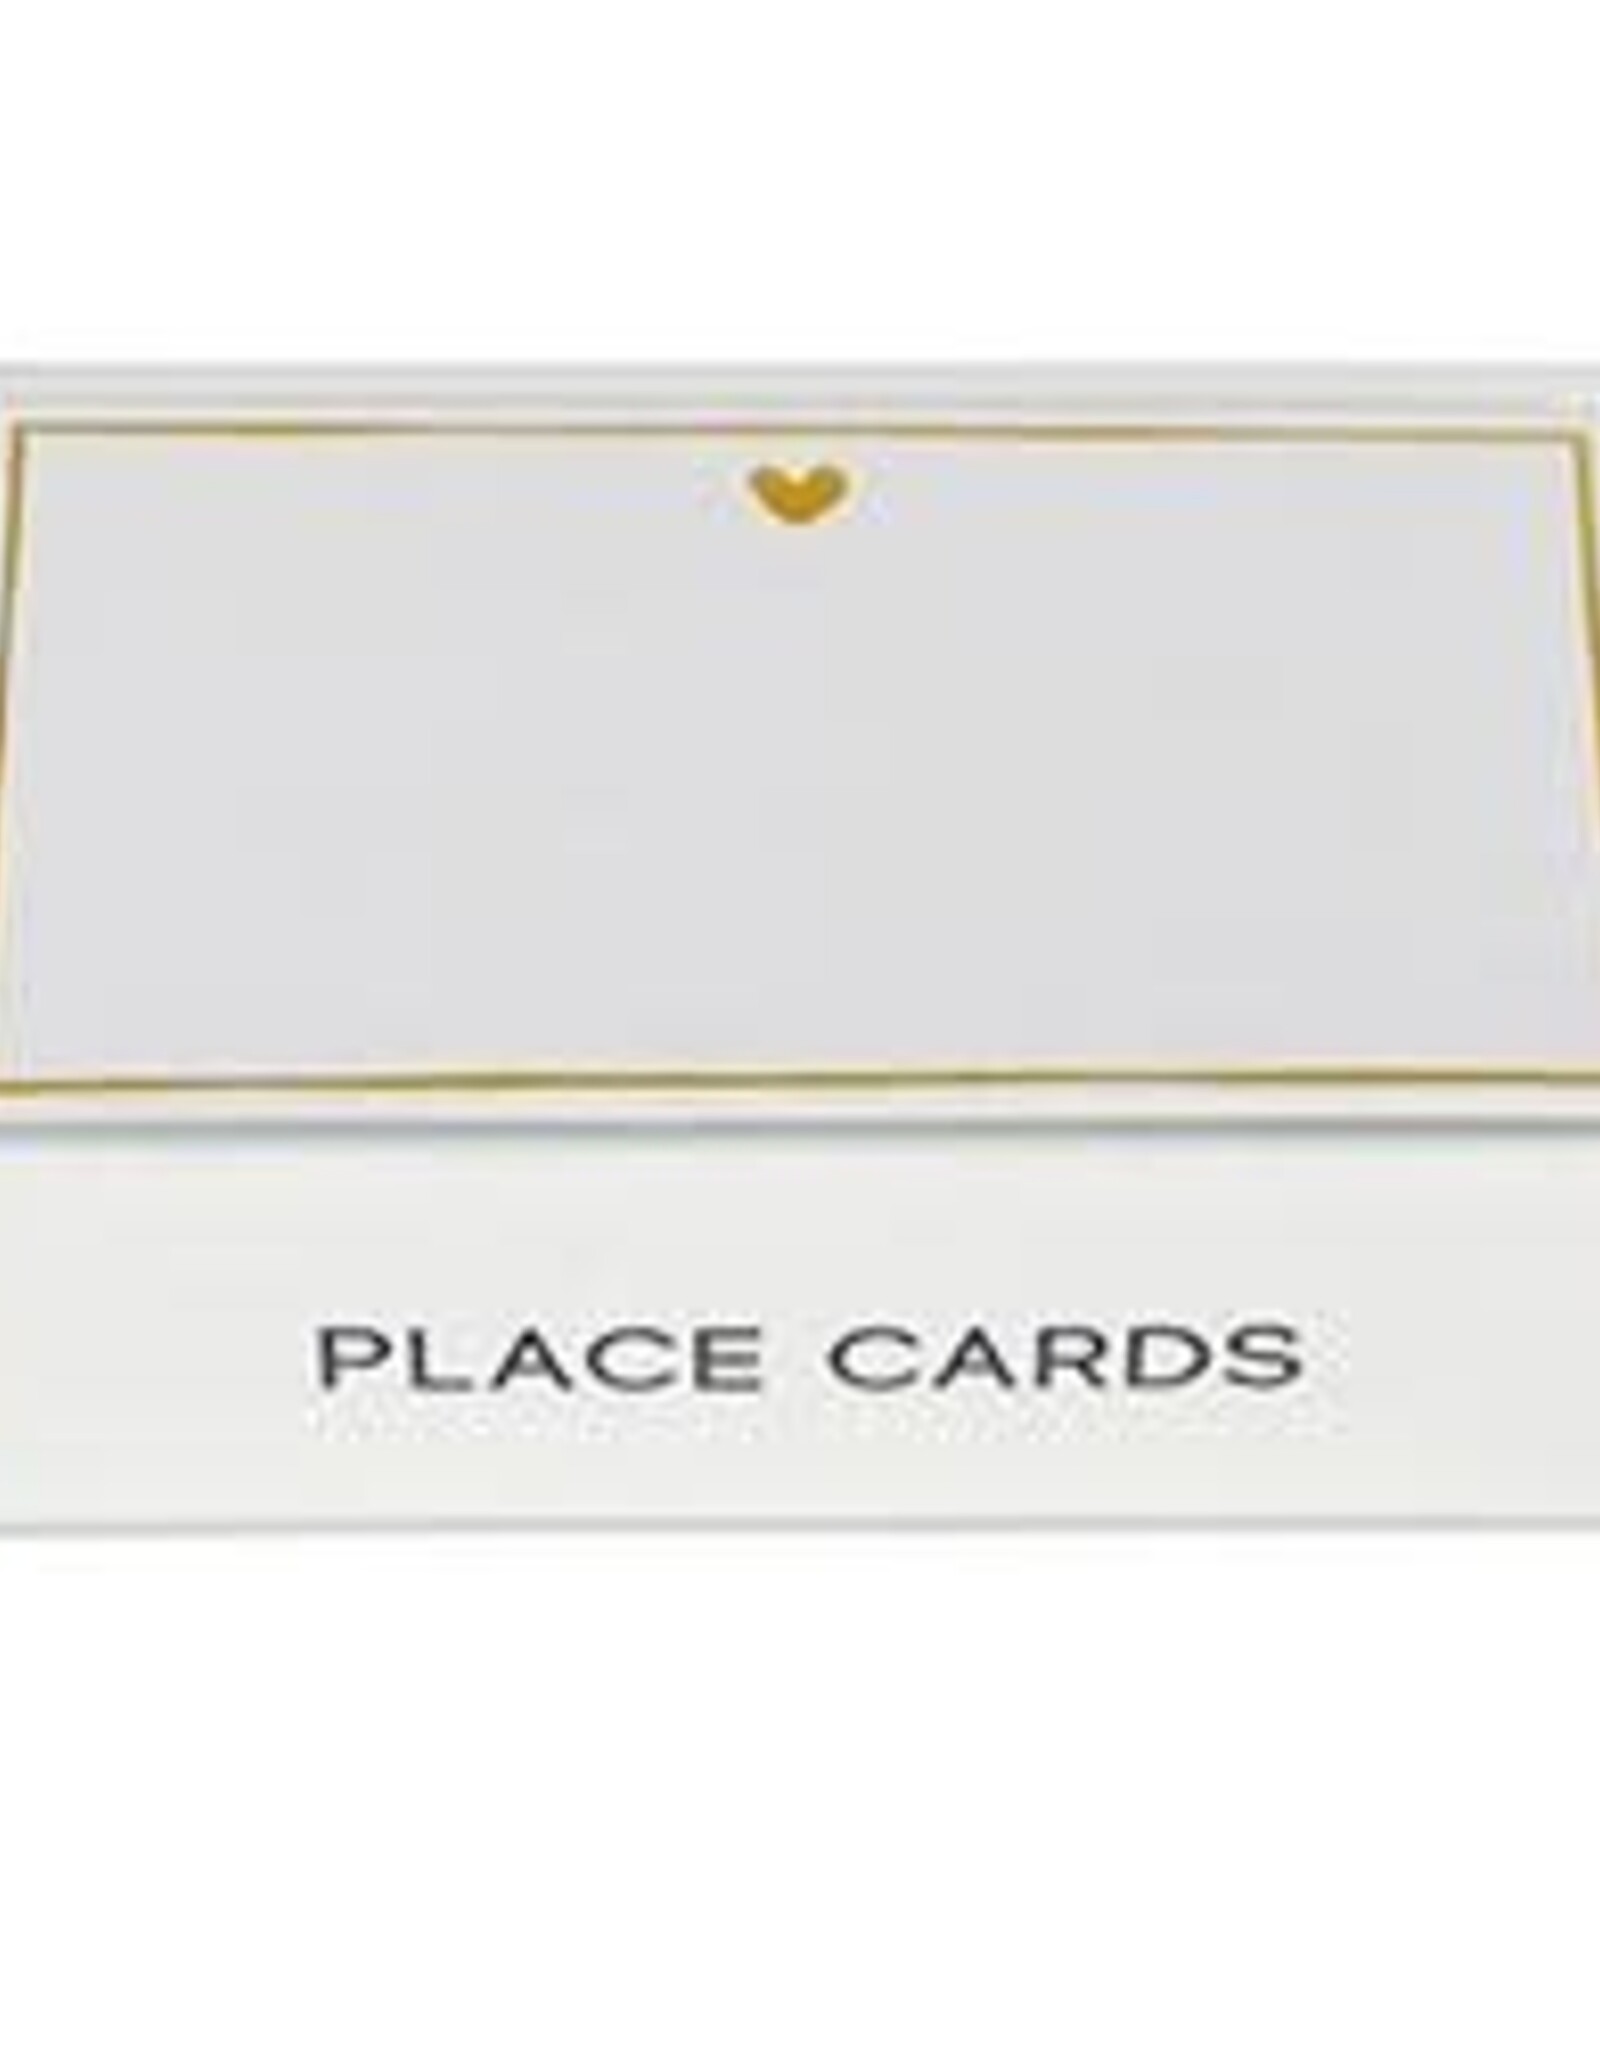 Gold Foil Place Cards - Heart